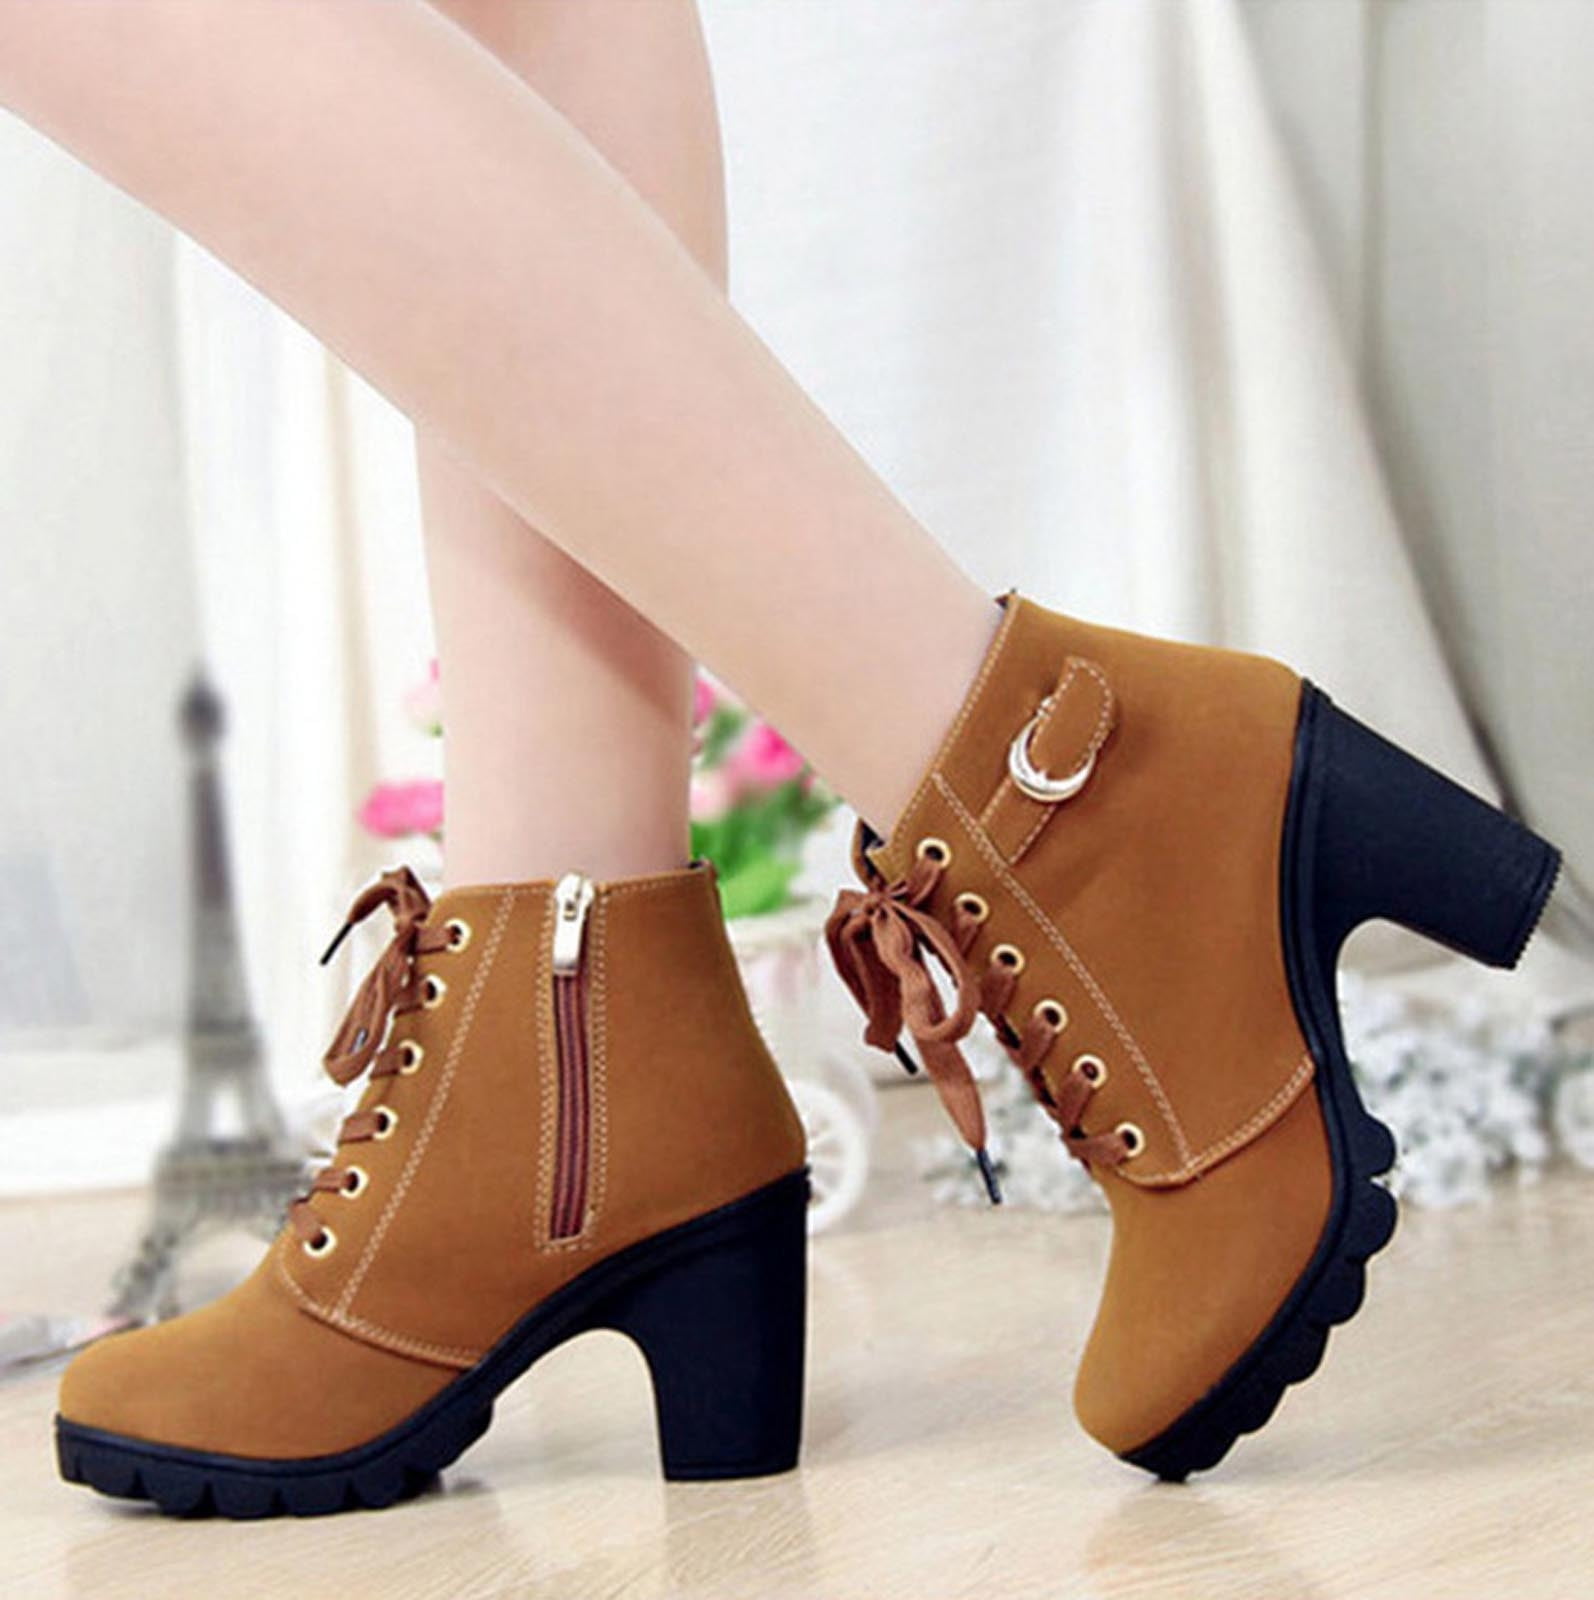 High Heels Women Wedges Side Zipper Boots For Children G7510 · Eoooh❣❣ ·  Online Store Powered by Storenvy